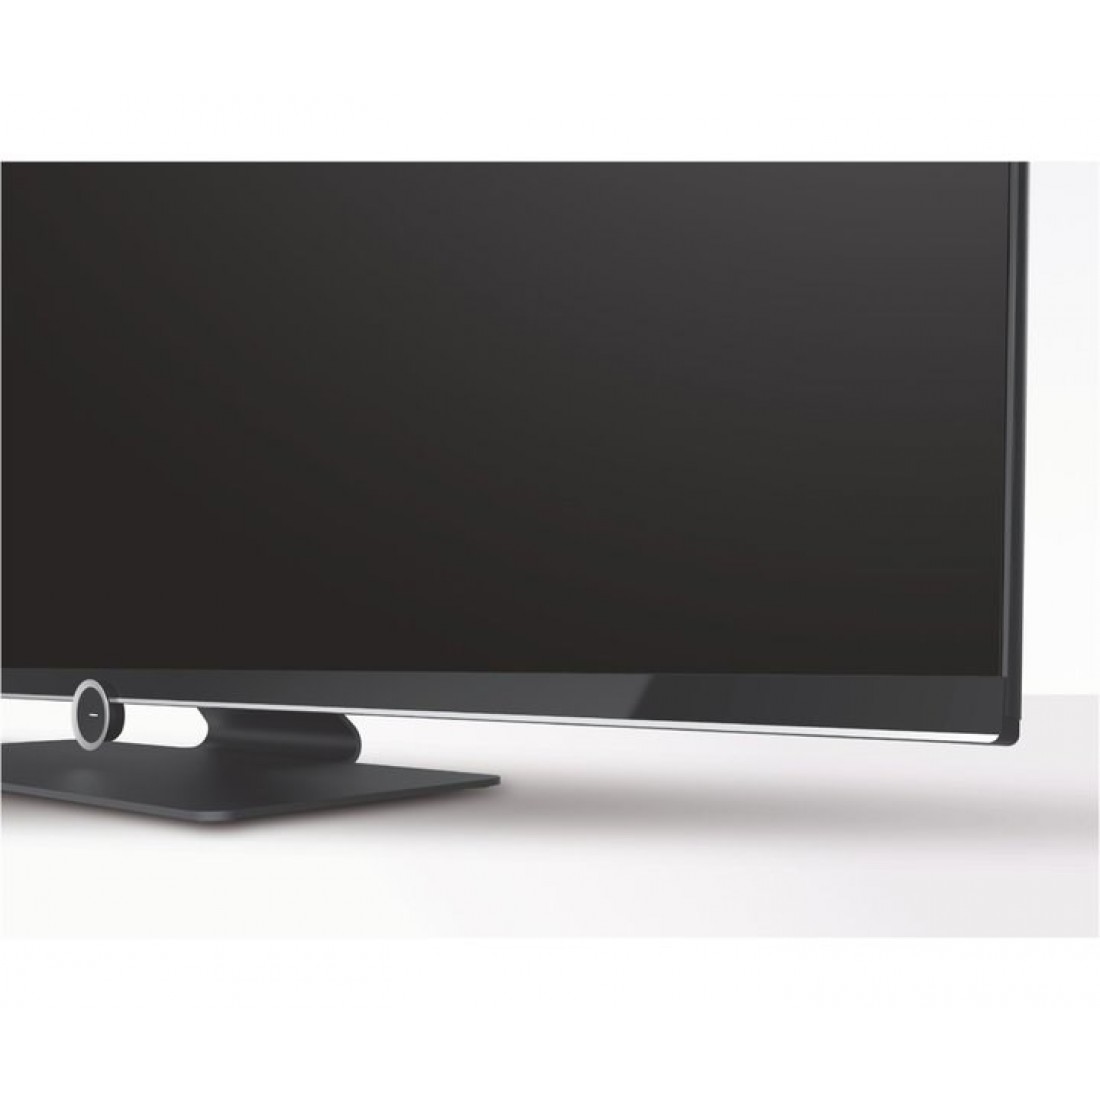 LOEWE BILD 1.43 - 4K UHD E-LED TV 